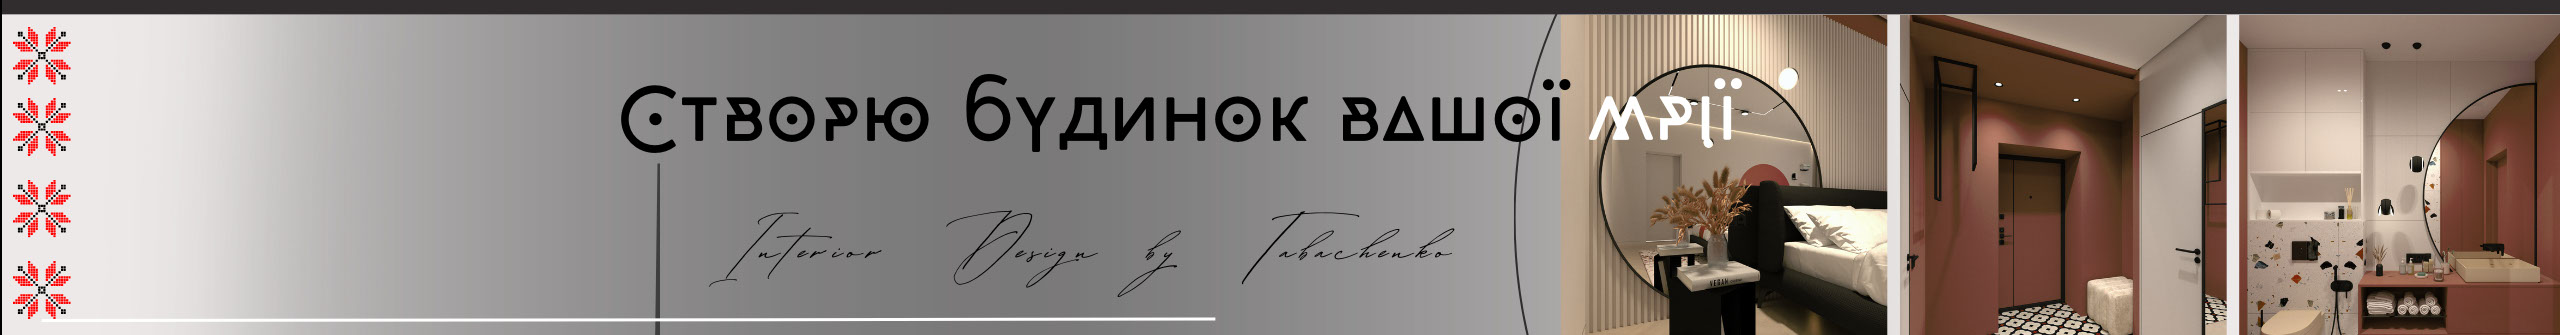 Banner de perfil de Interior Design by Tabachenko